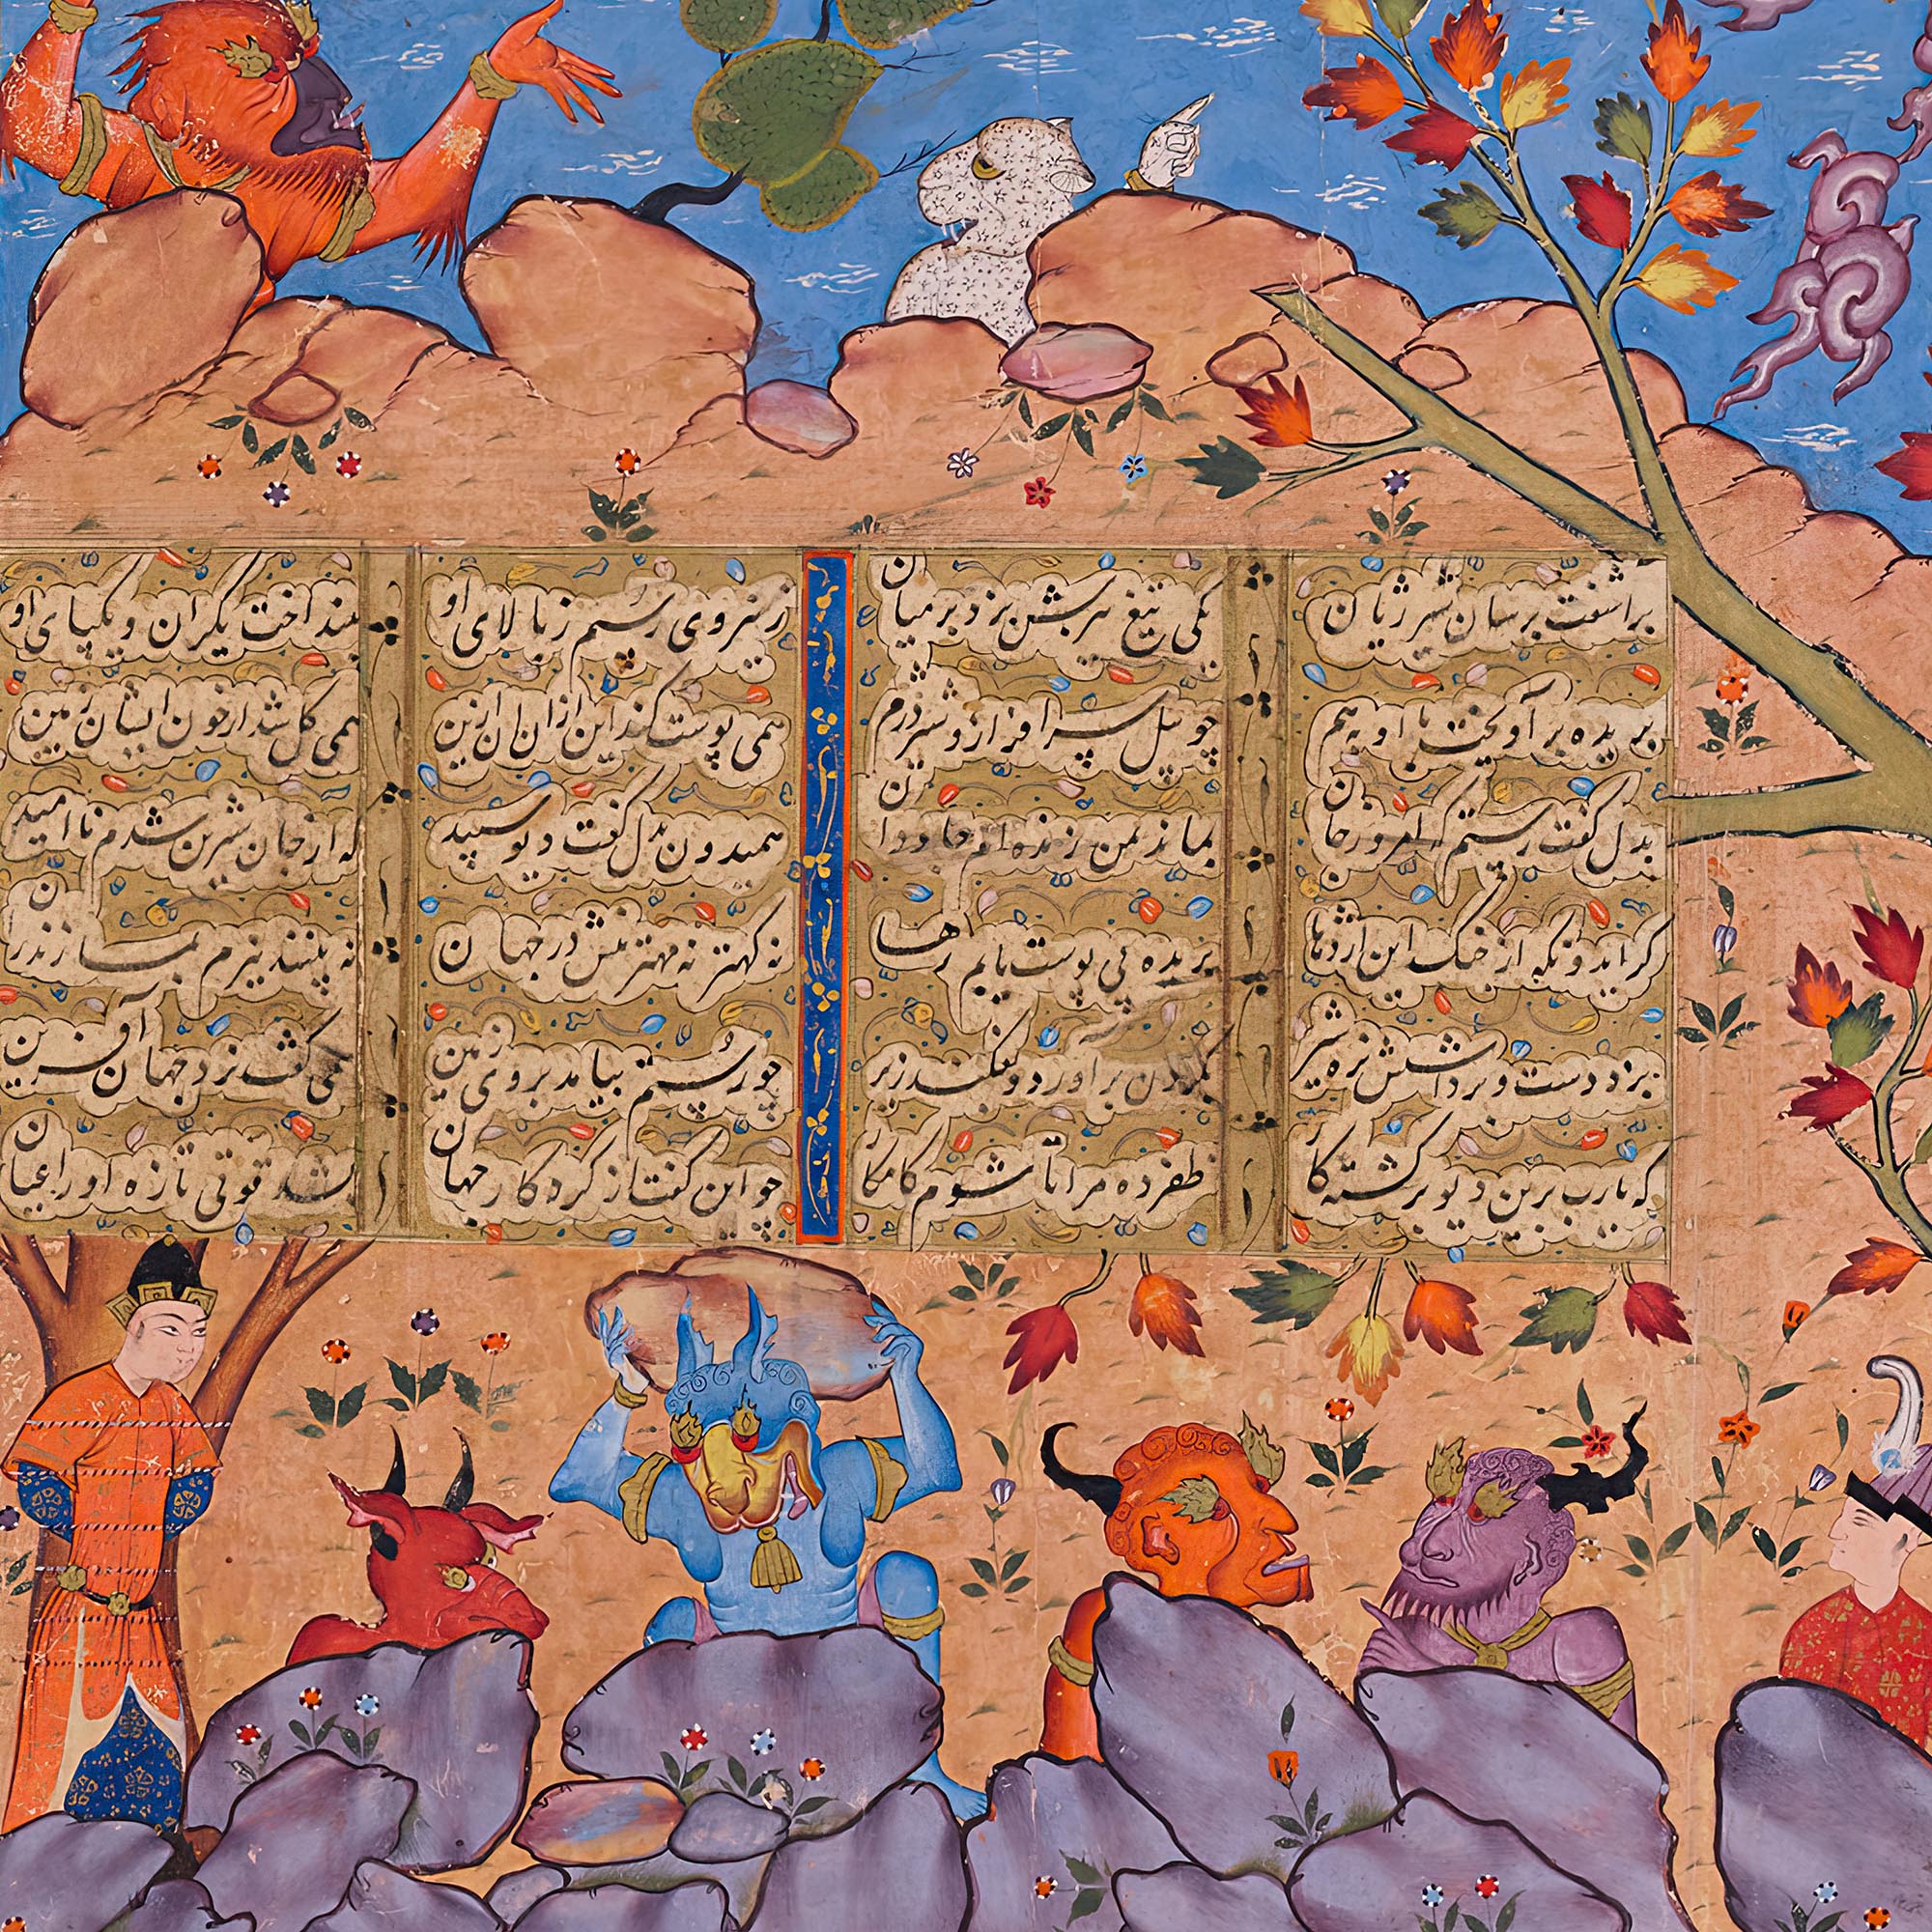 T-shirt XS Rostam Battles the White Div (Demon) | Shāhnāmeh Ancient Persian Illuminated Codex Manuscript | Mythical Folkloric Graphic Art T-Shirt